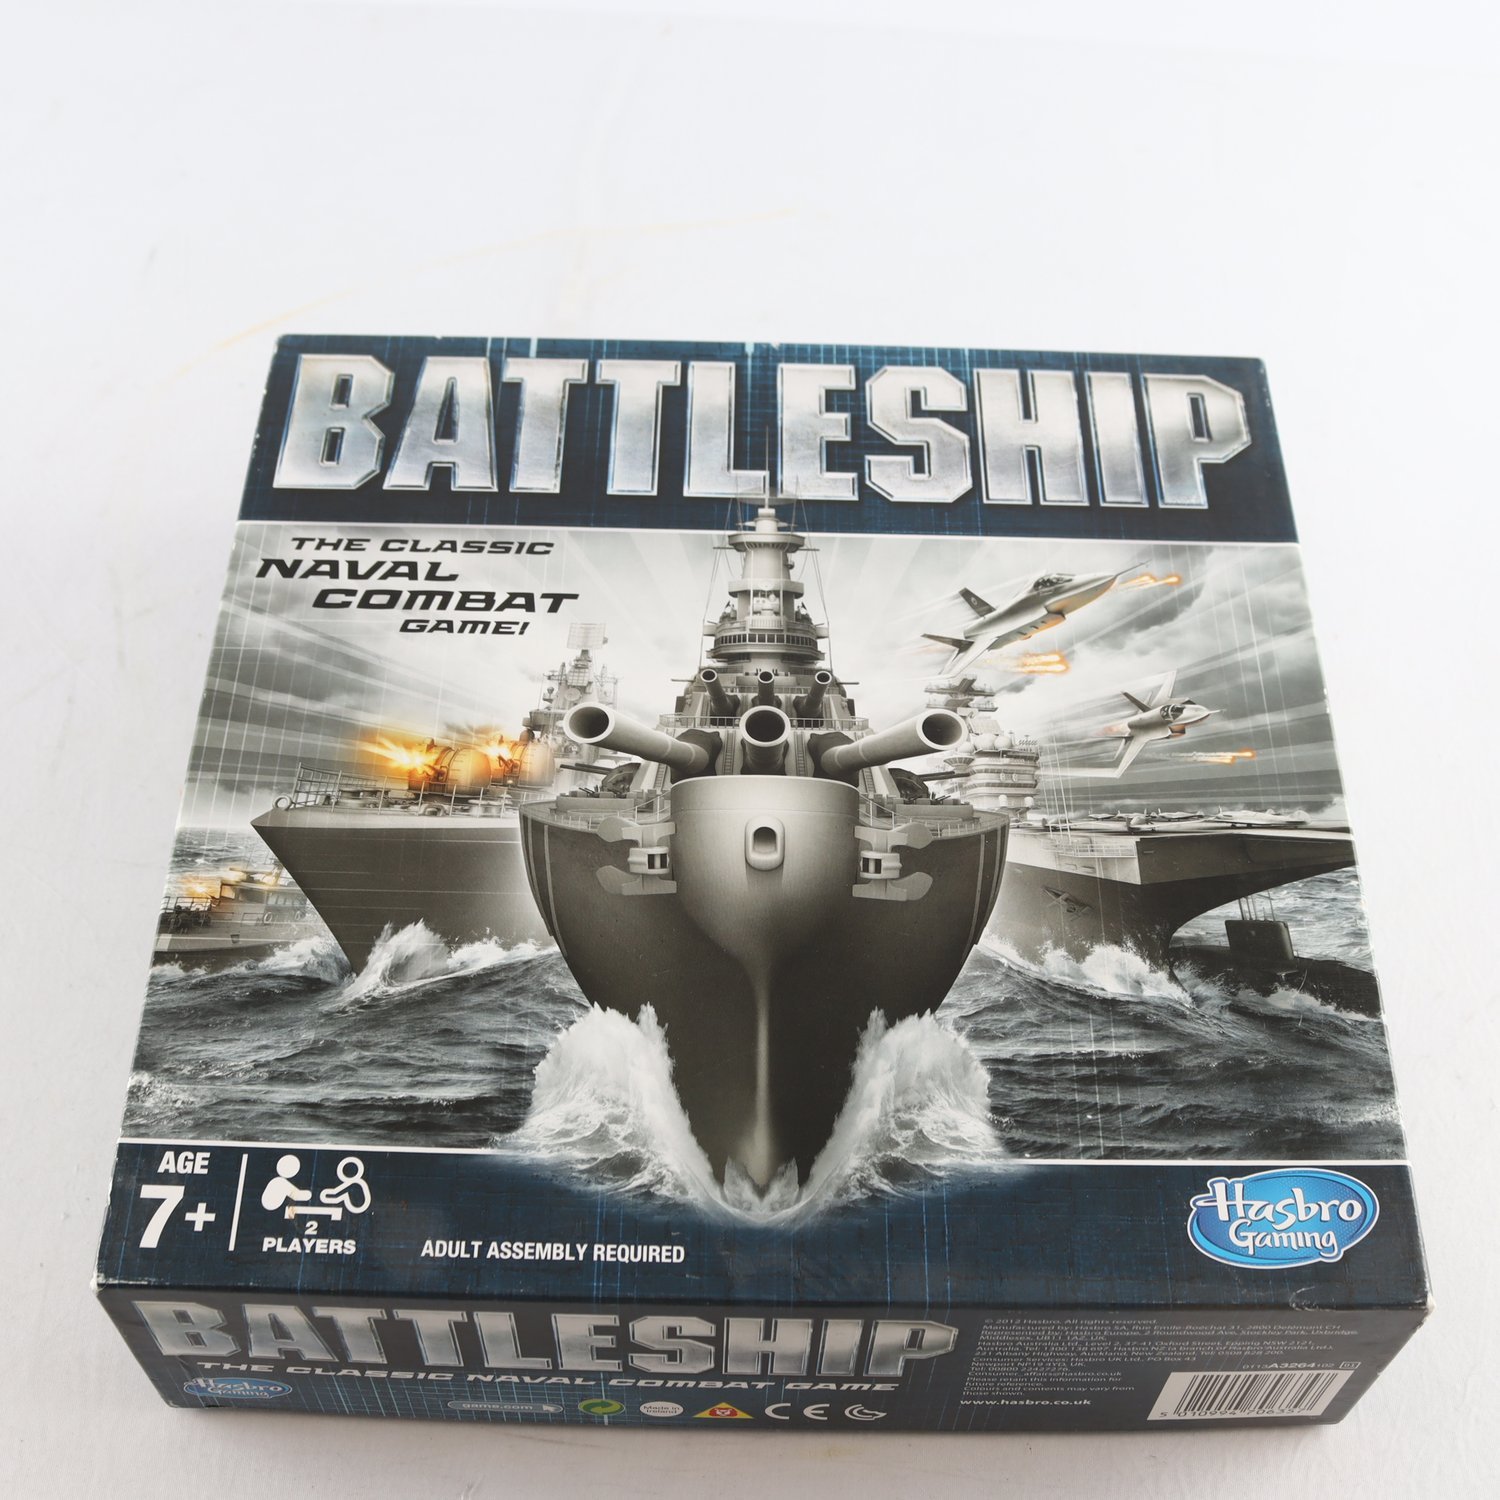 Spel, Battleship, hasbro gaming.